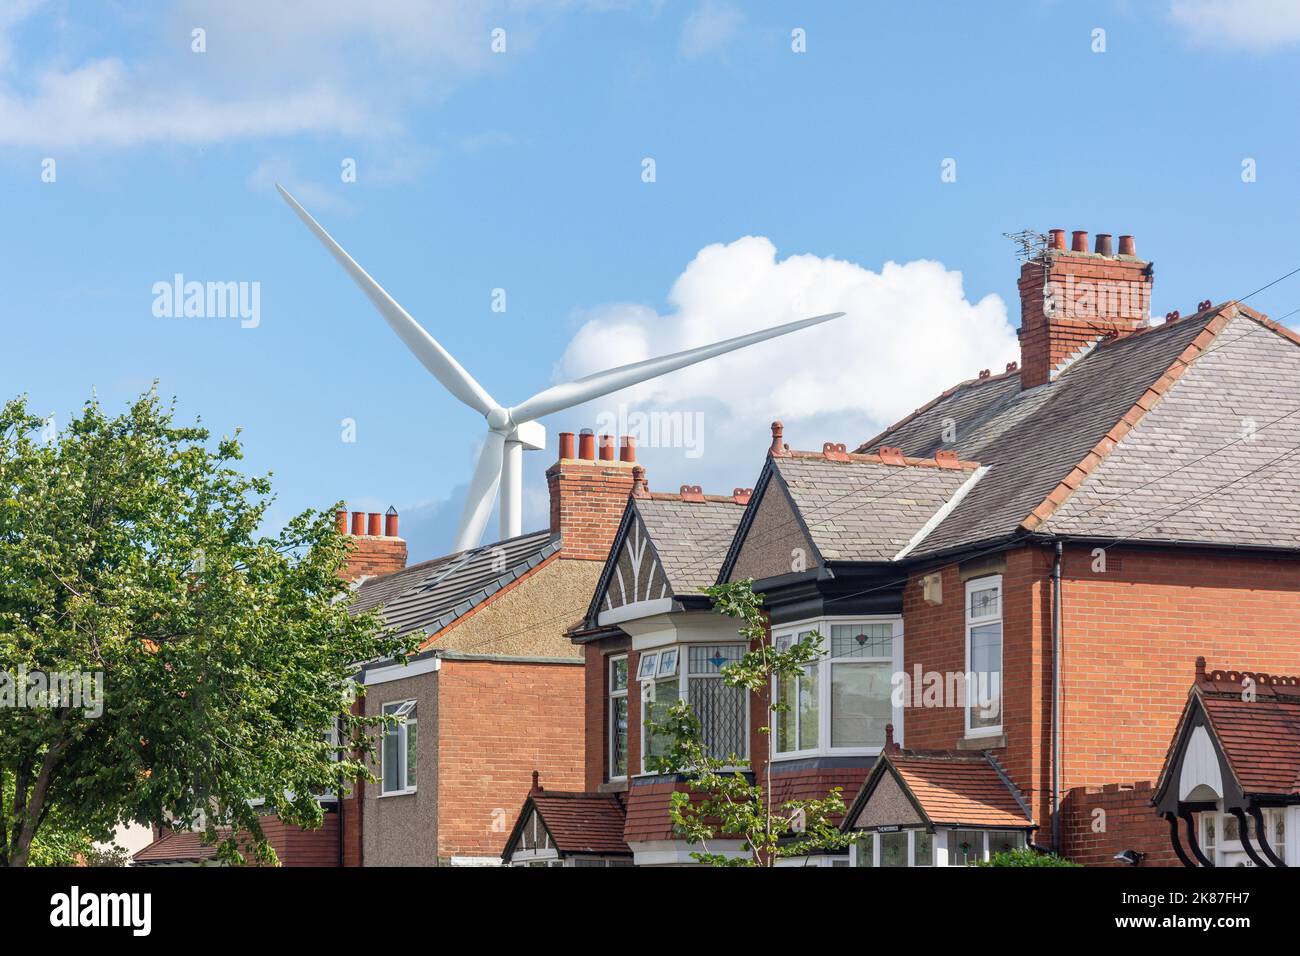 Street scene with wind turbine behind, Blyth, Northumberland, England, United Kingdom Stock Photo